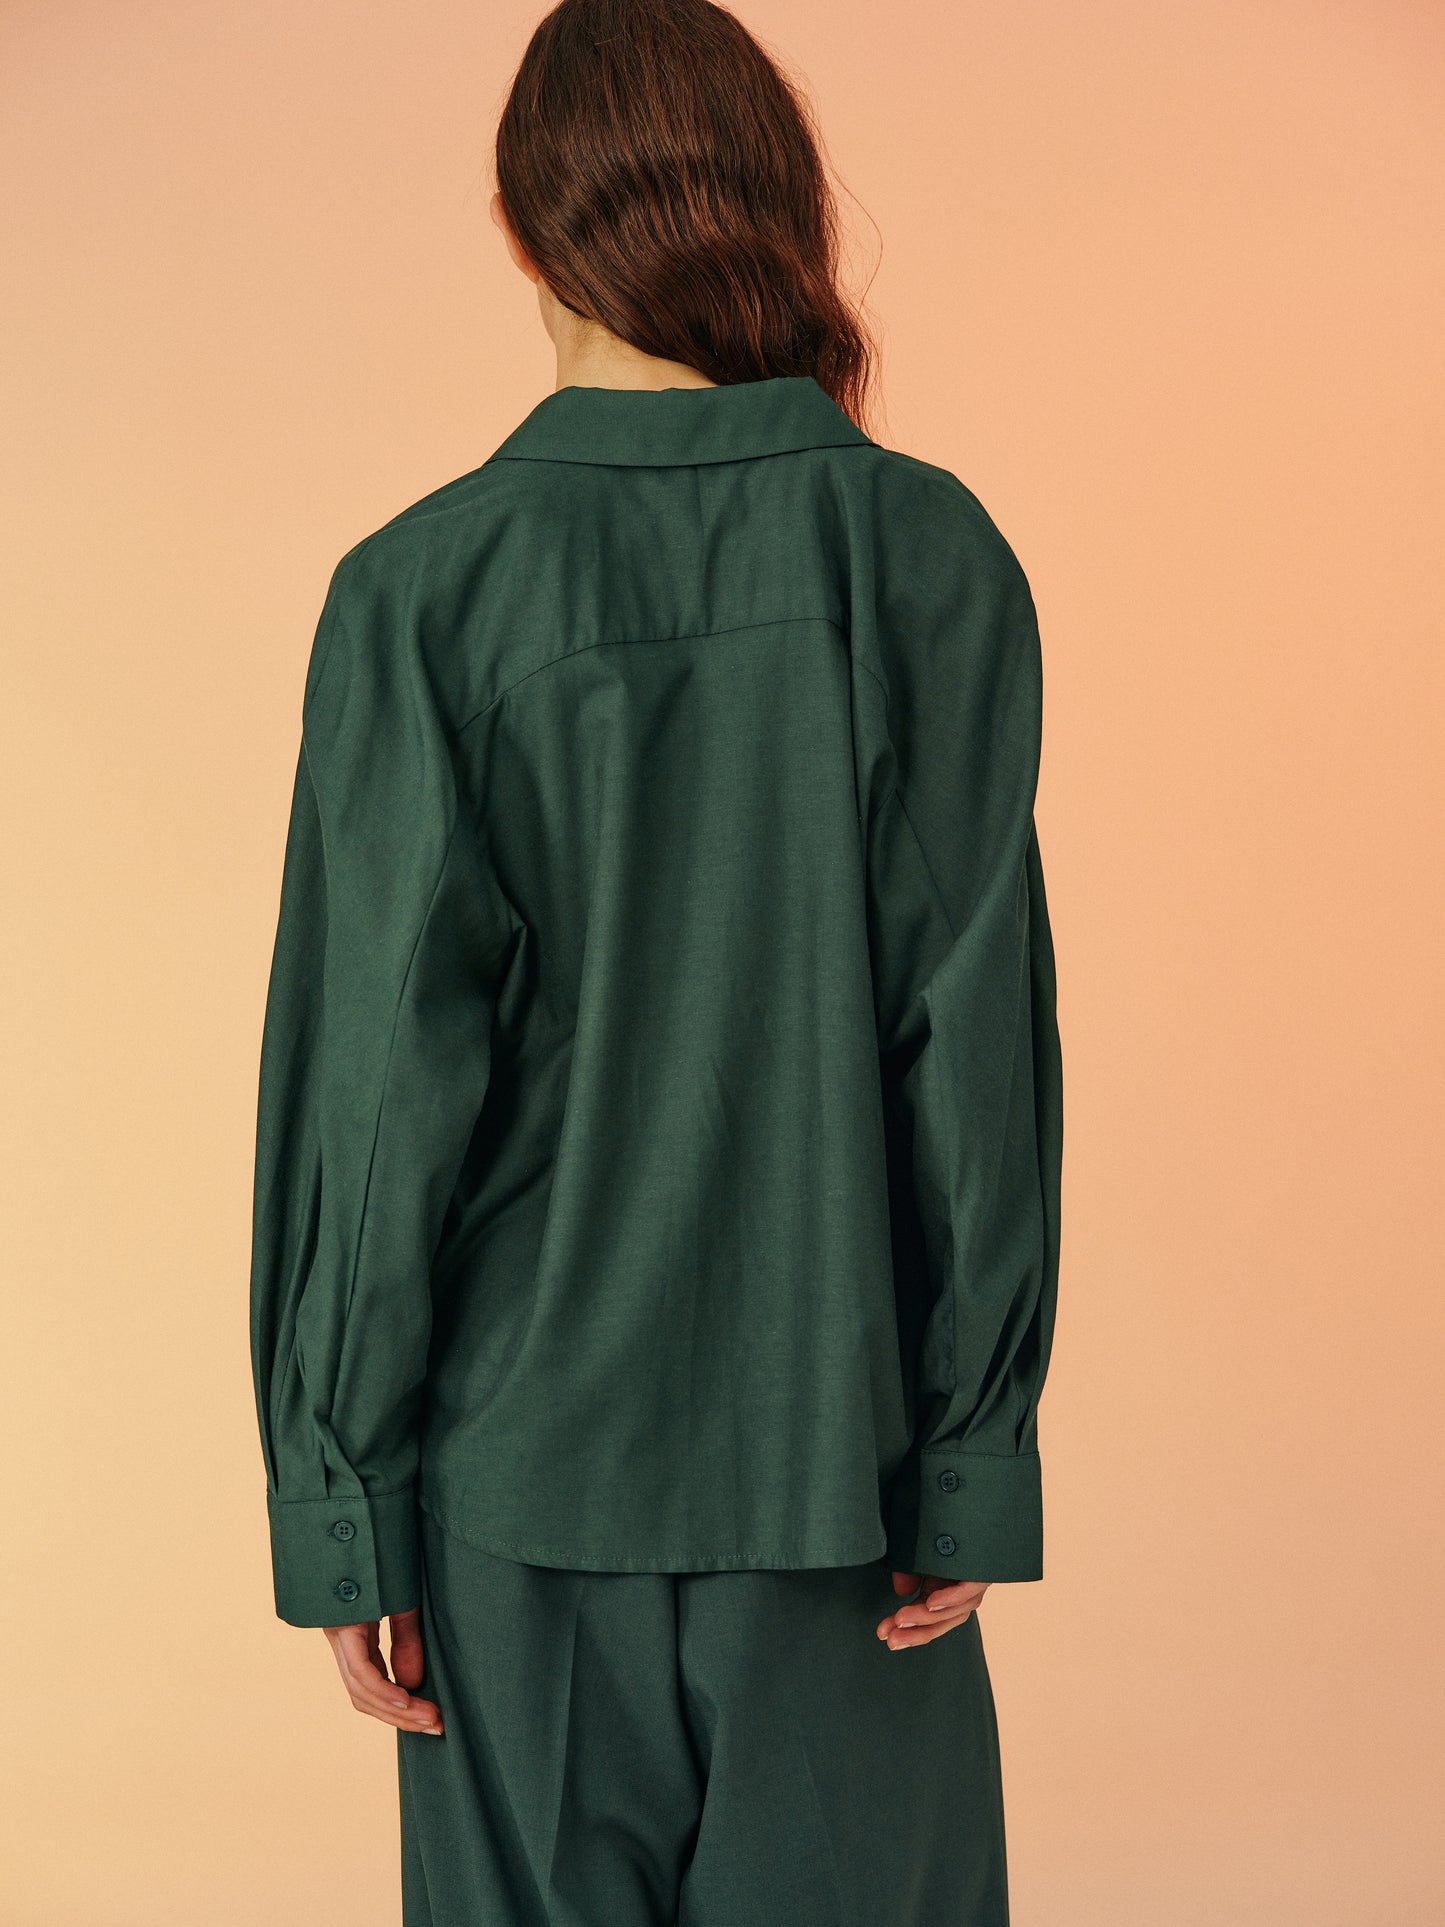 One-Shoulder Tank + Shirt Set, Mint & Peale Green